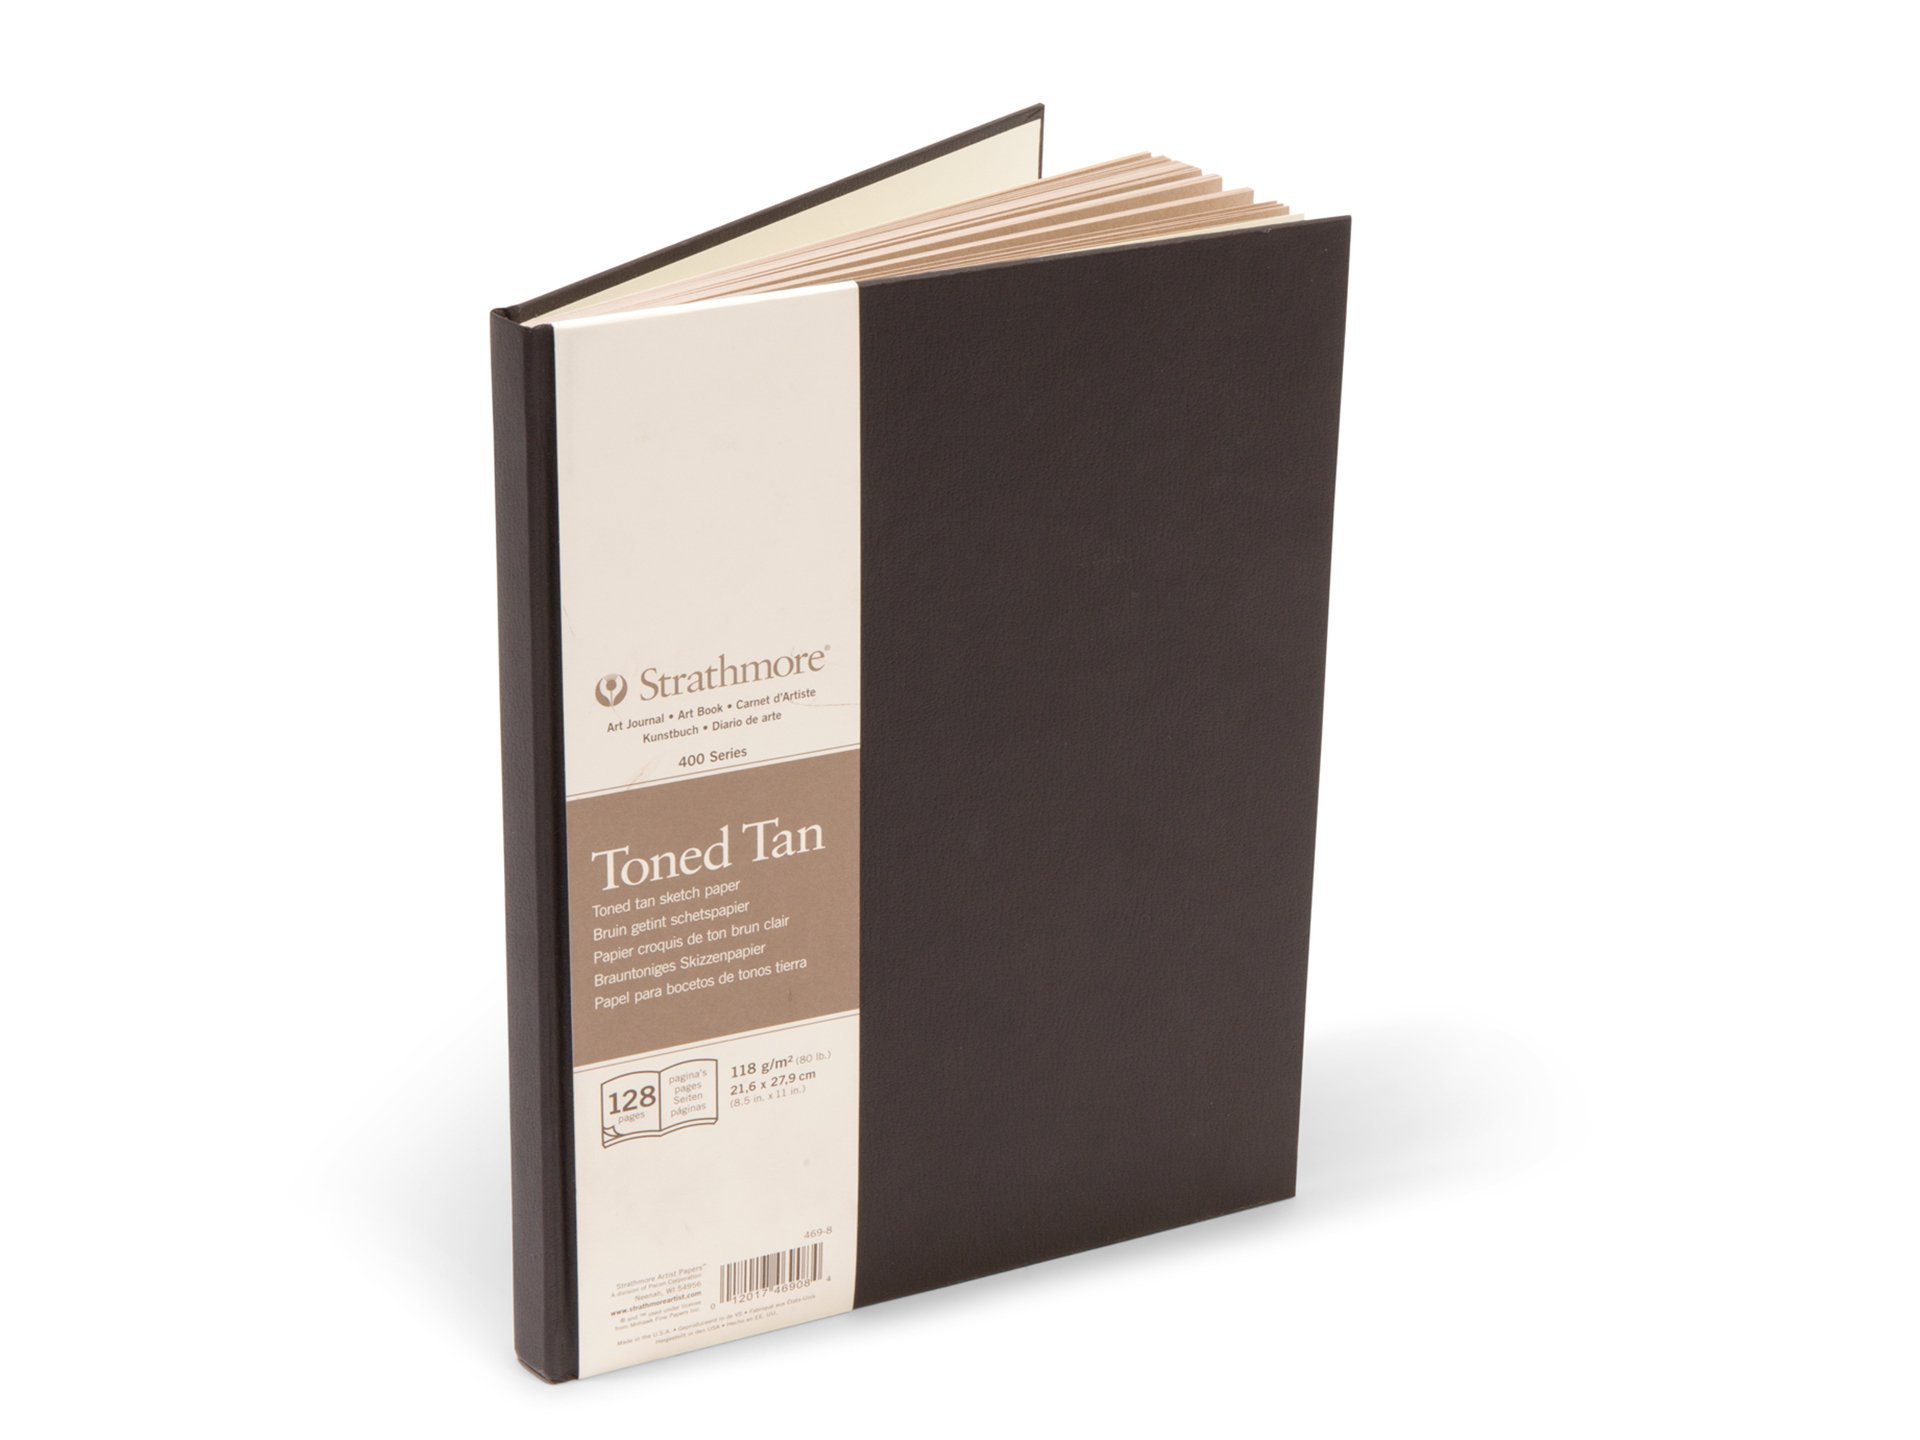 Acquistare Strathmore Sketchbook Toned Tan marrone marrone 118 g/m² online